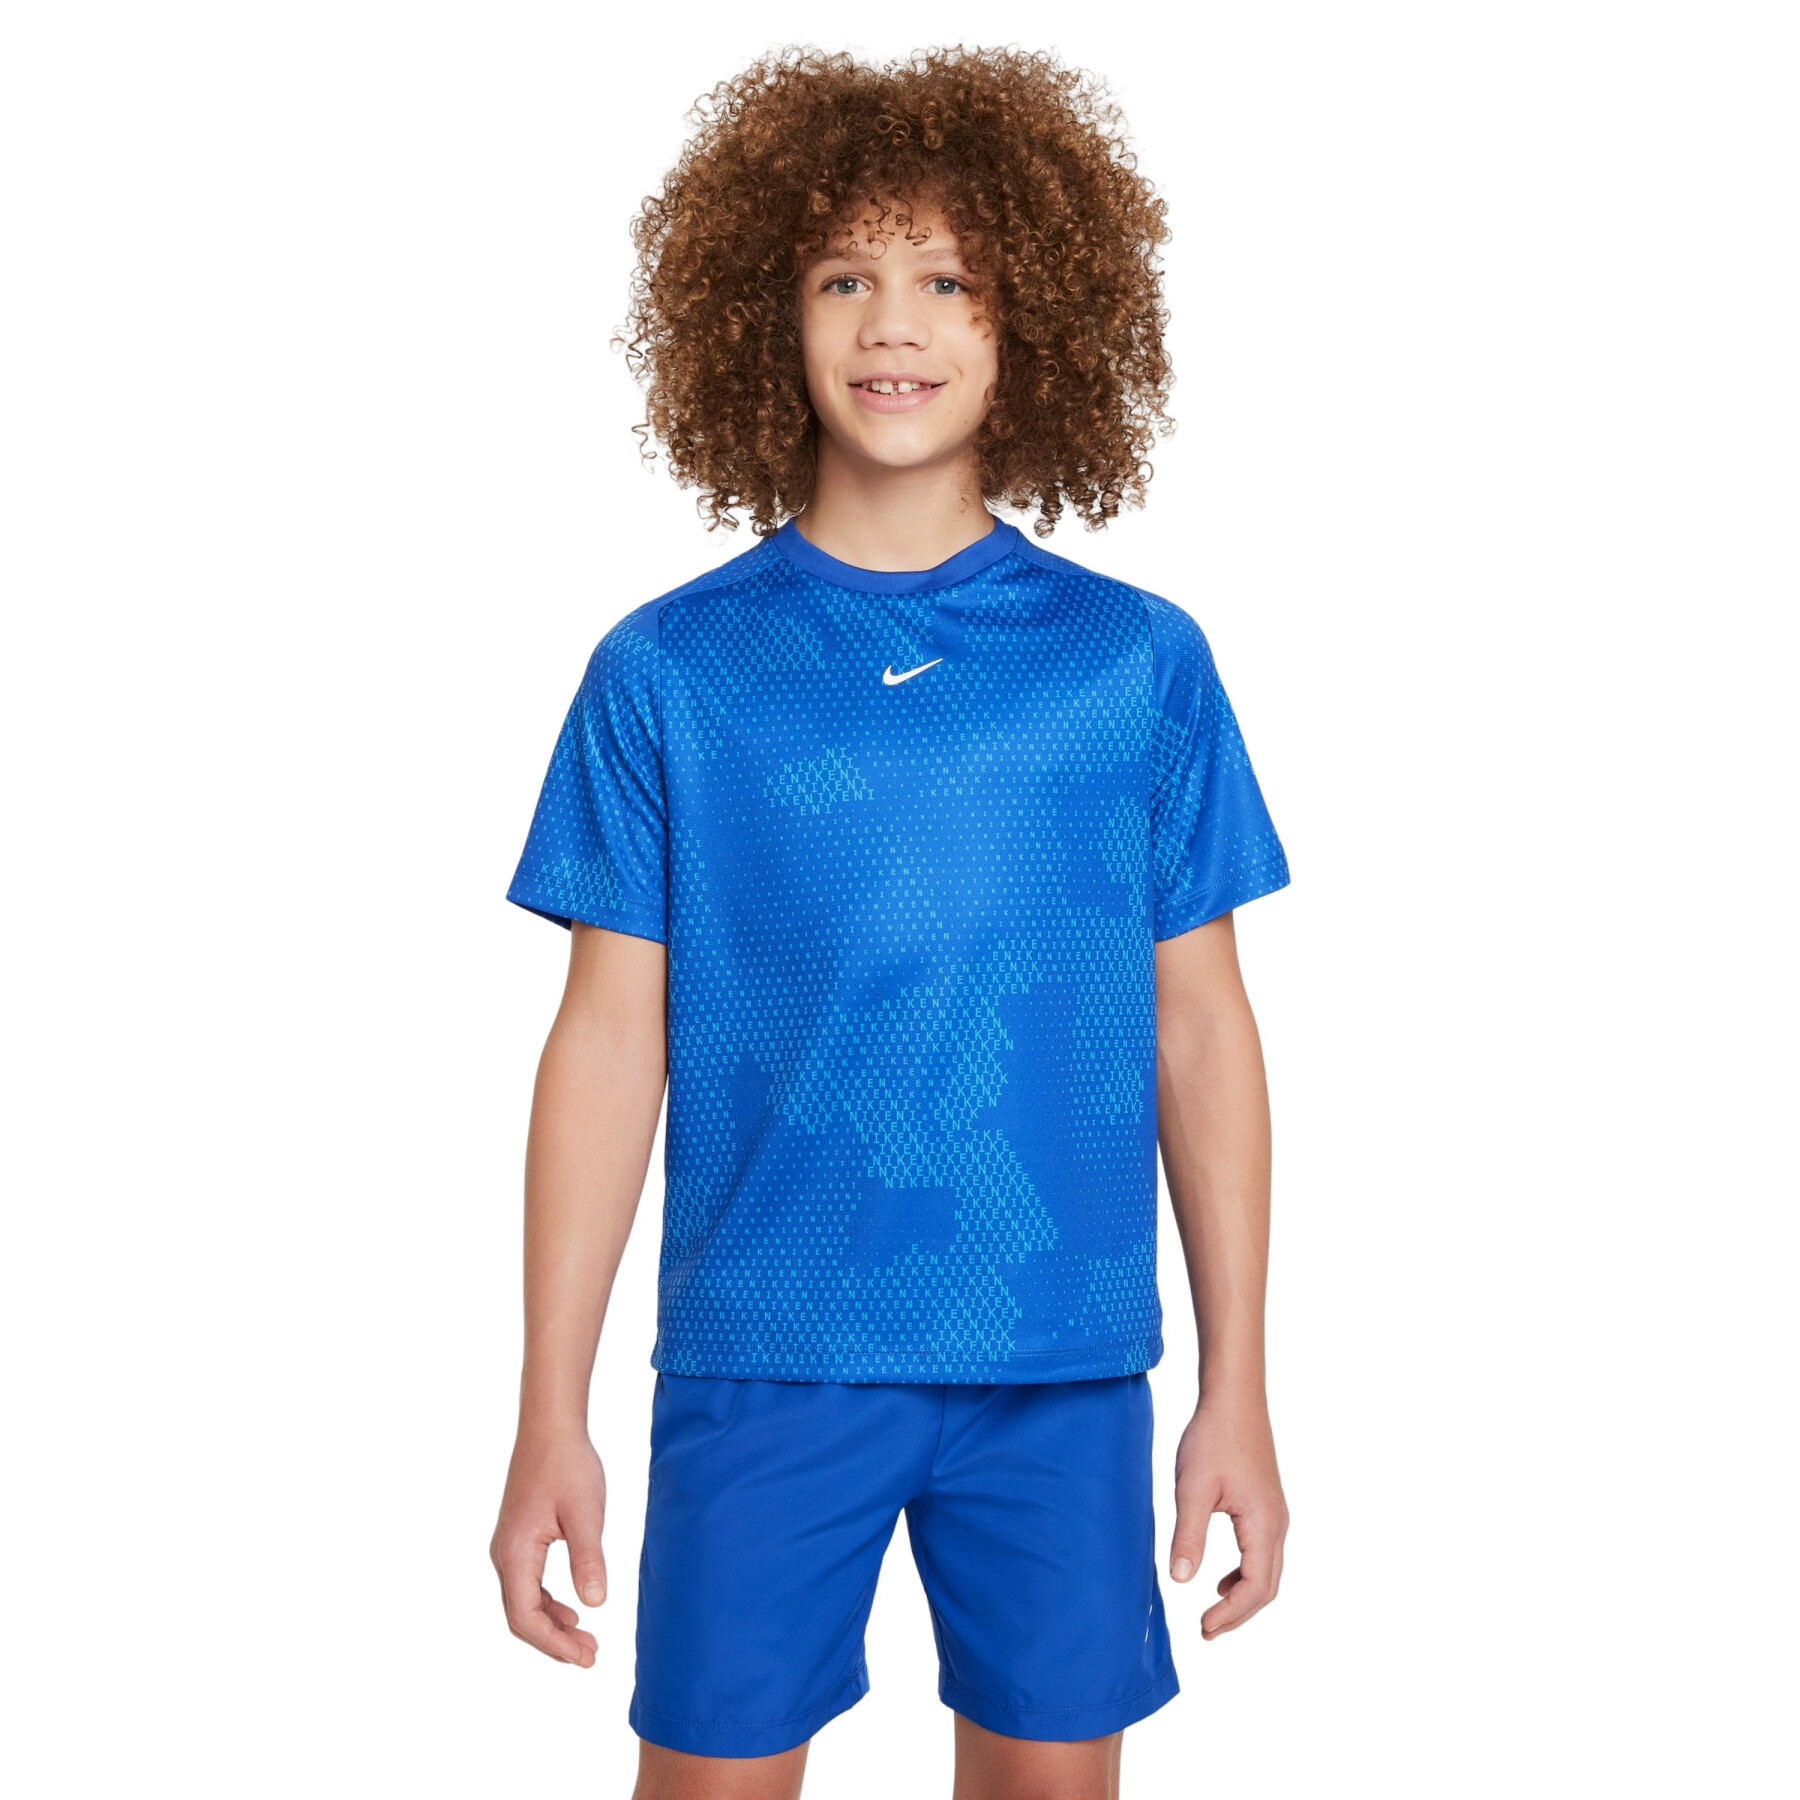 Camiseta infantil Nike Multi